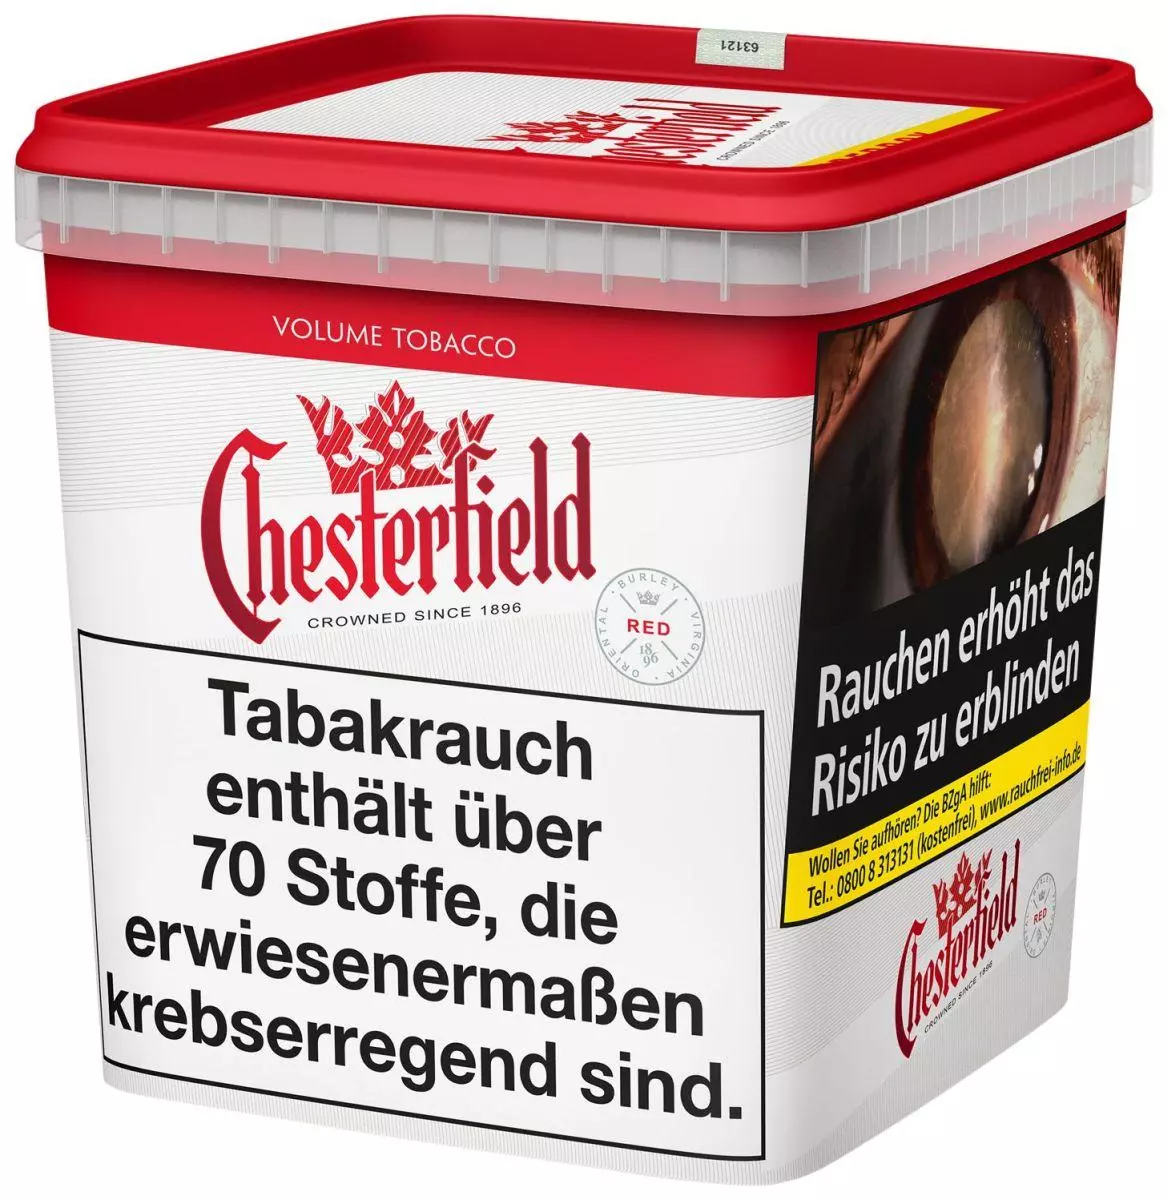 Chesterfield Red Giga Volumen Tobacco 1 x 260g Tabak